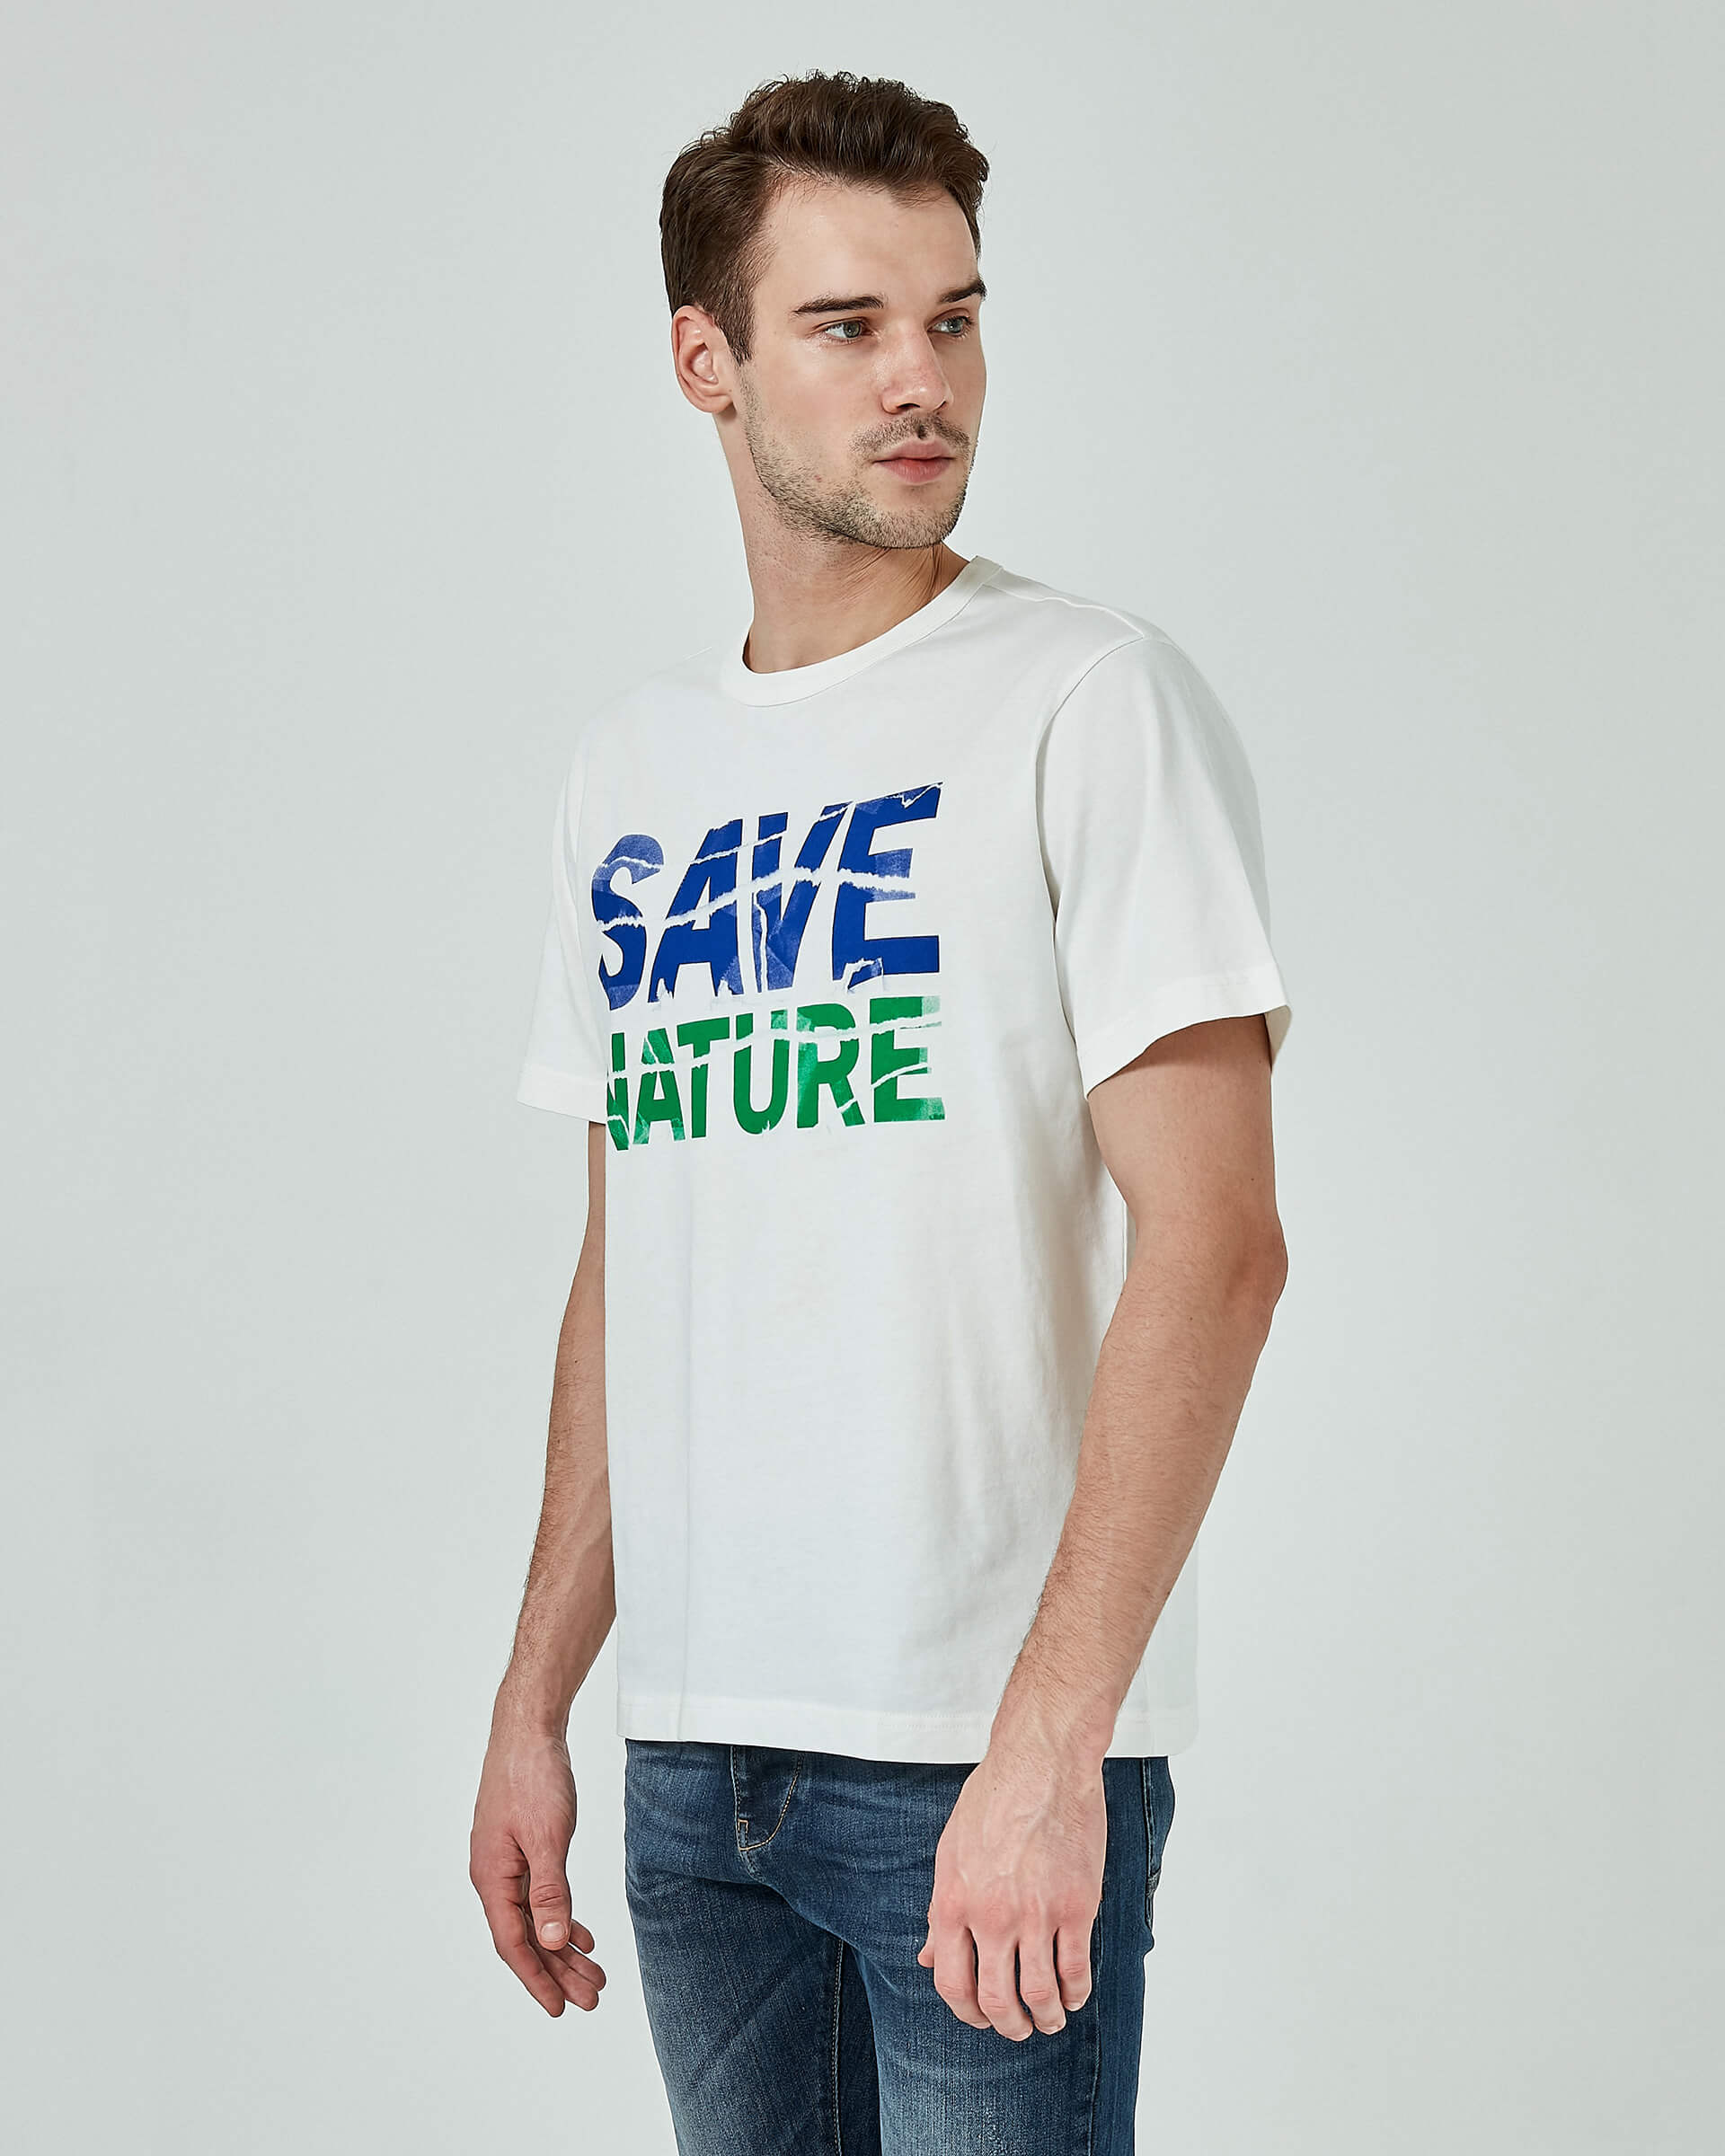 Benetton Message Tshirts. 3